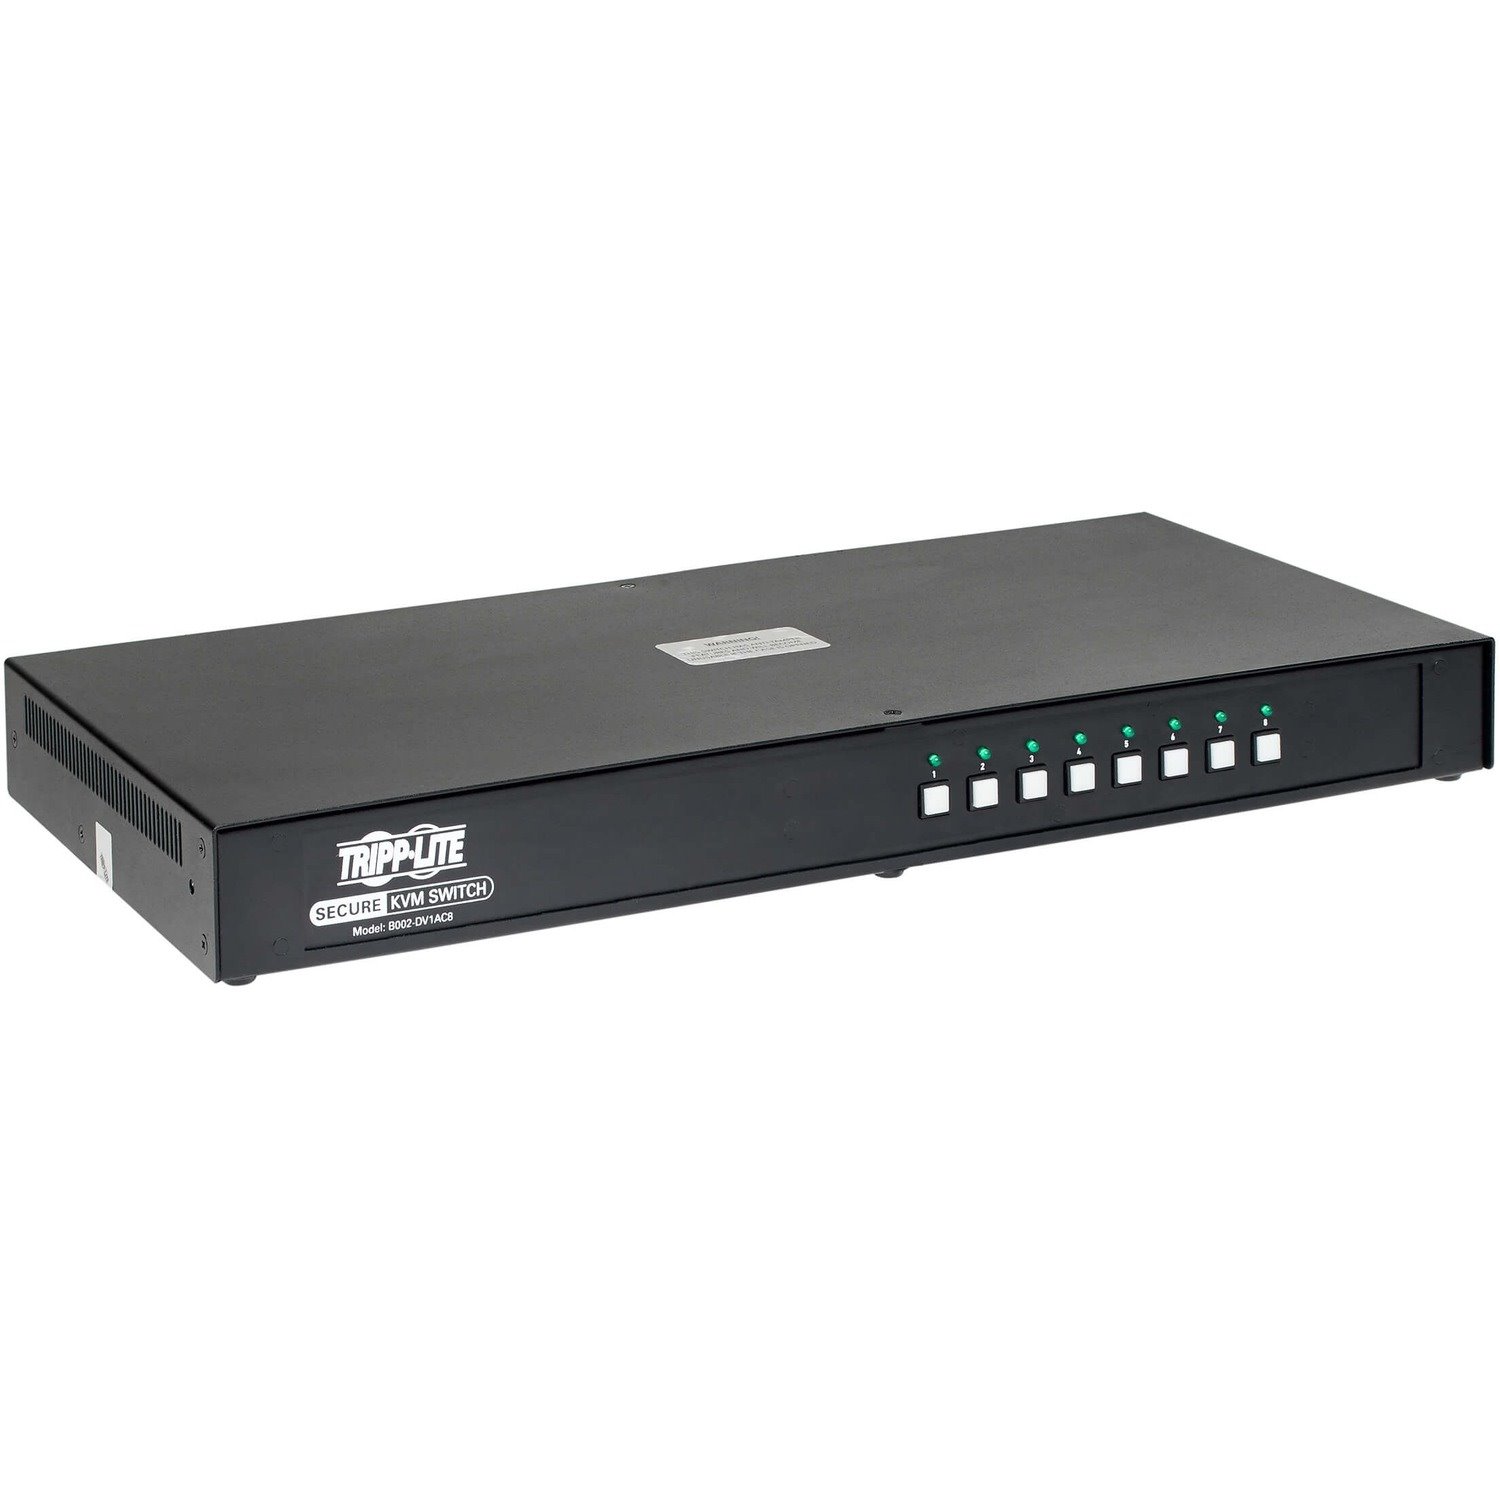 Tripp Lite Secure KVM Switch 8-Port DVI + Audio NIAP PP3.0 Certified w/ CAC